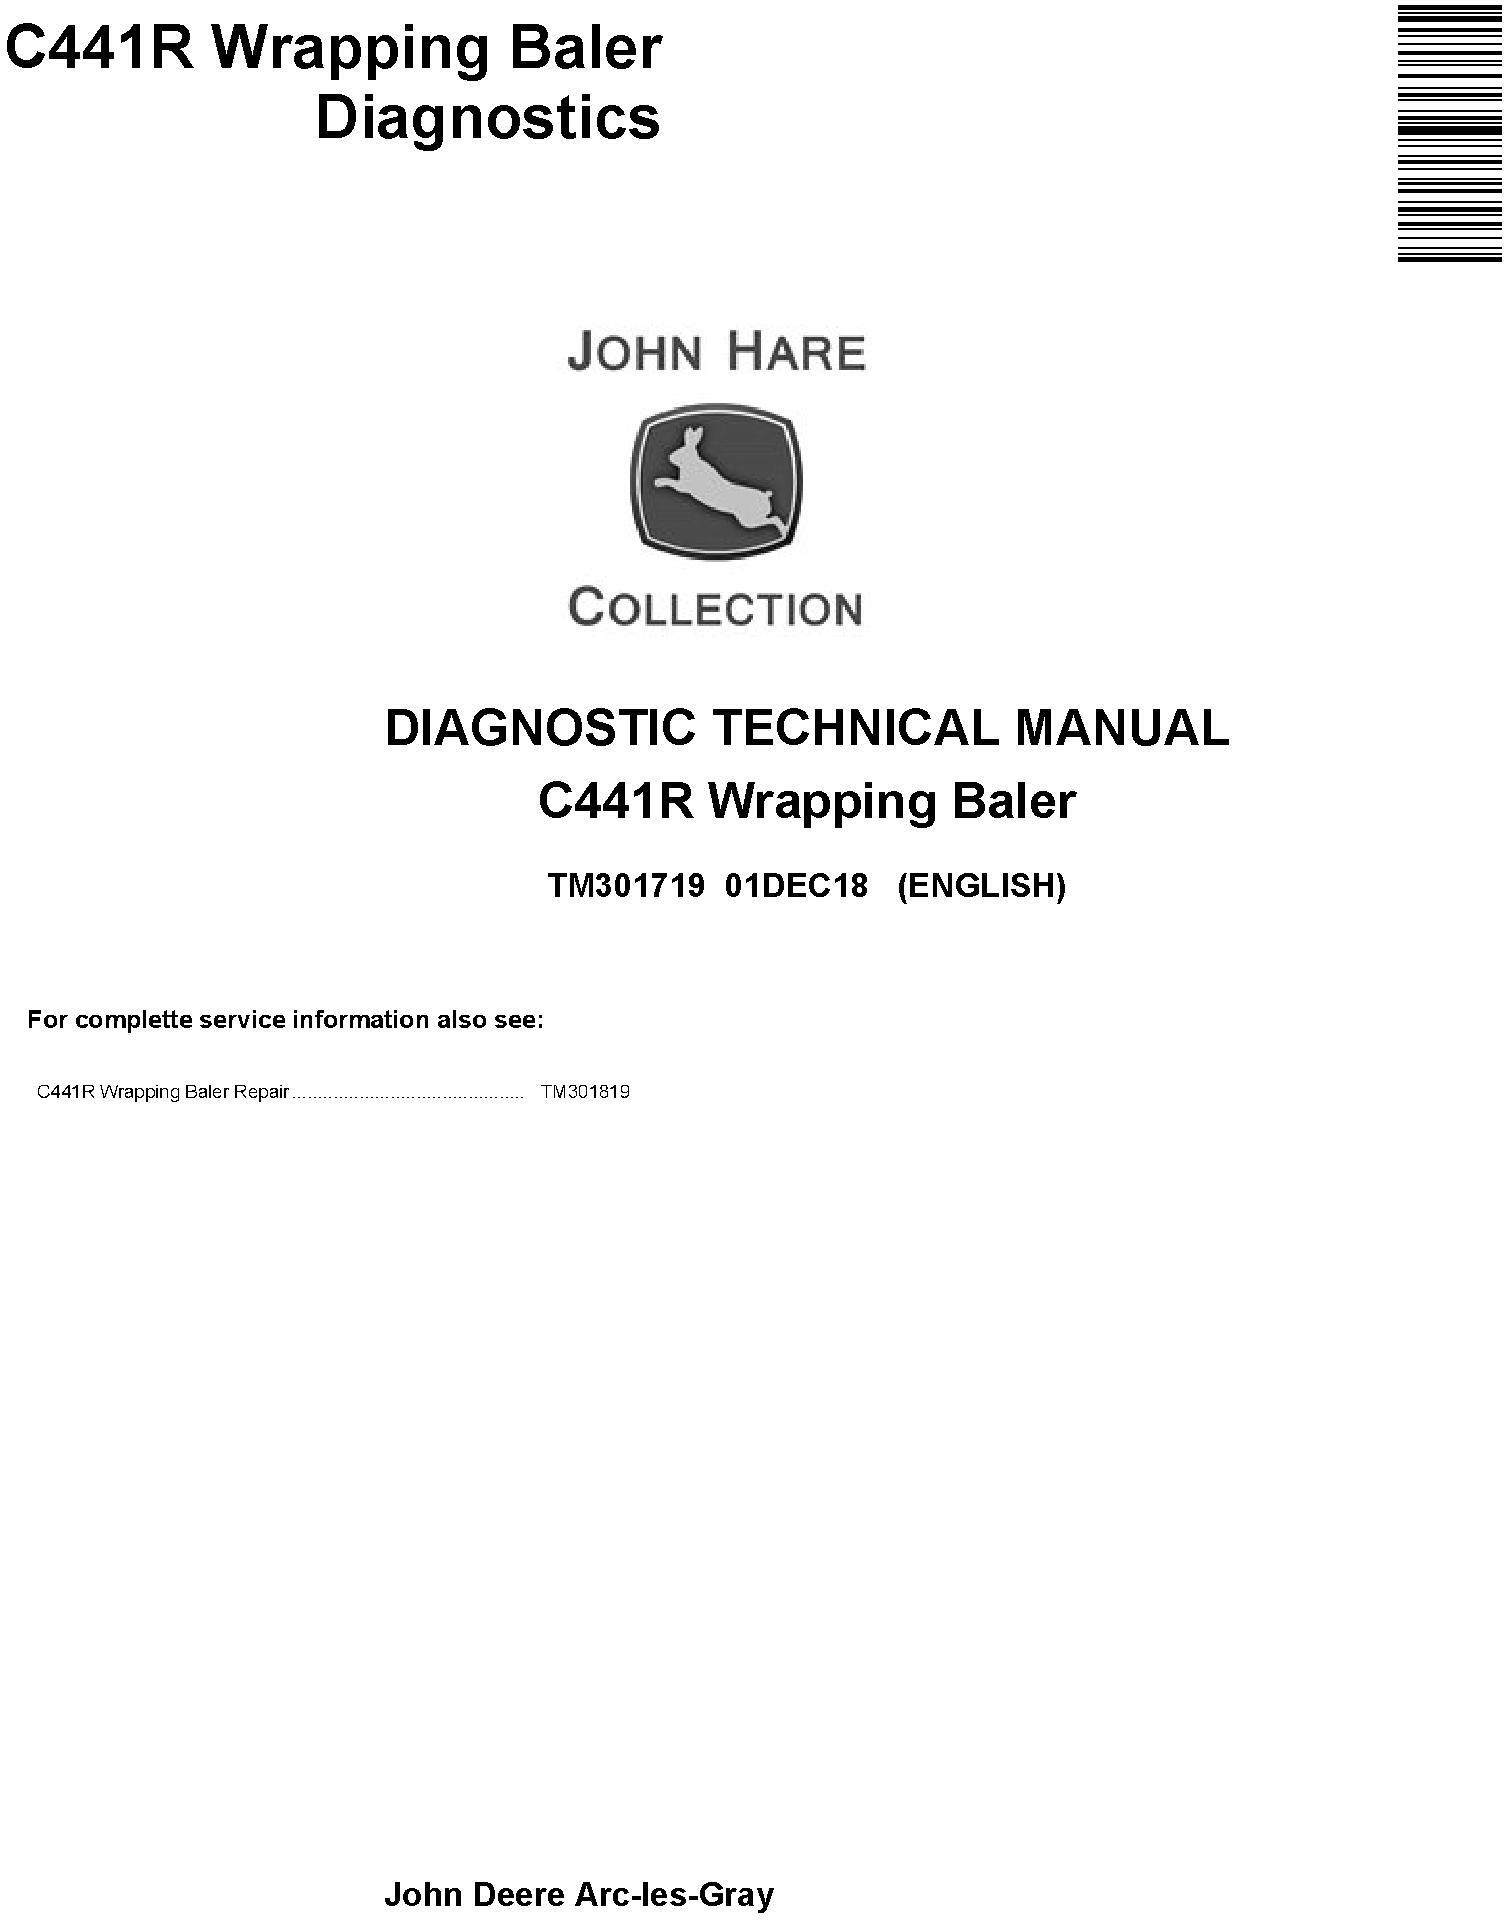 John Deere C441R Wrapping Baler Diagnostic Technical Manual TM301719